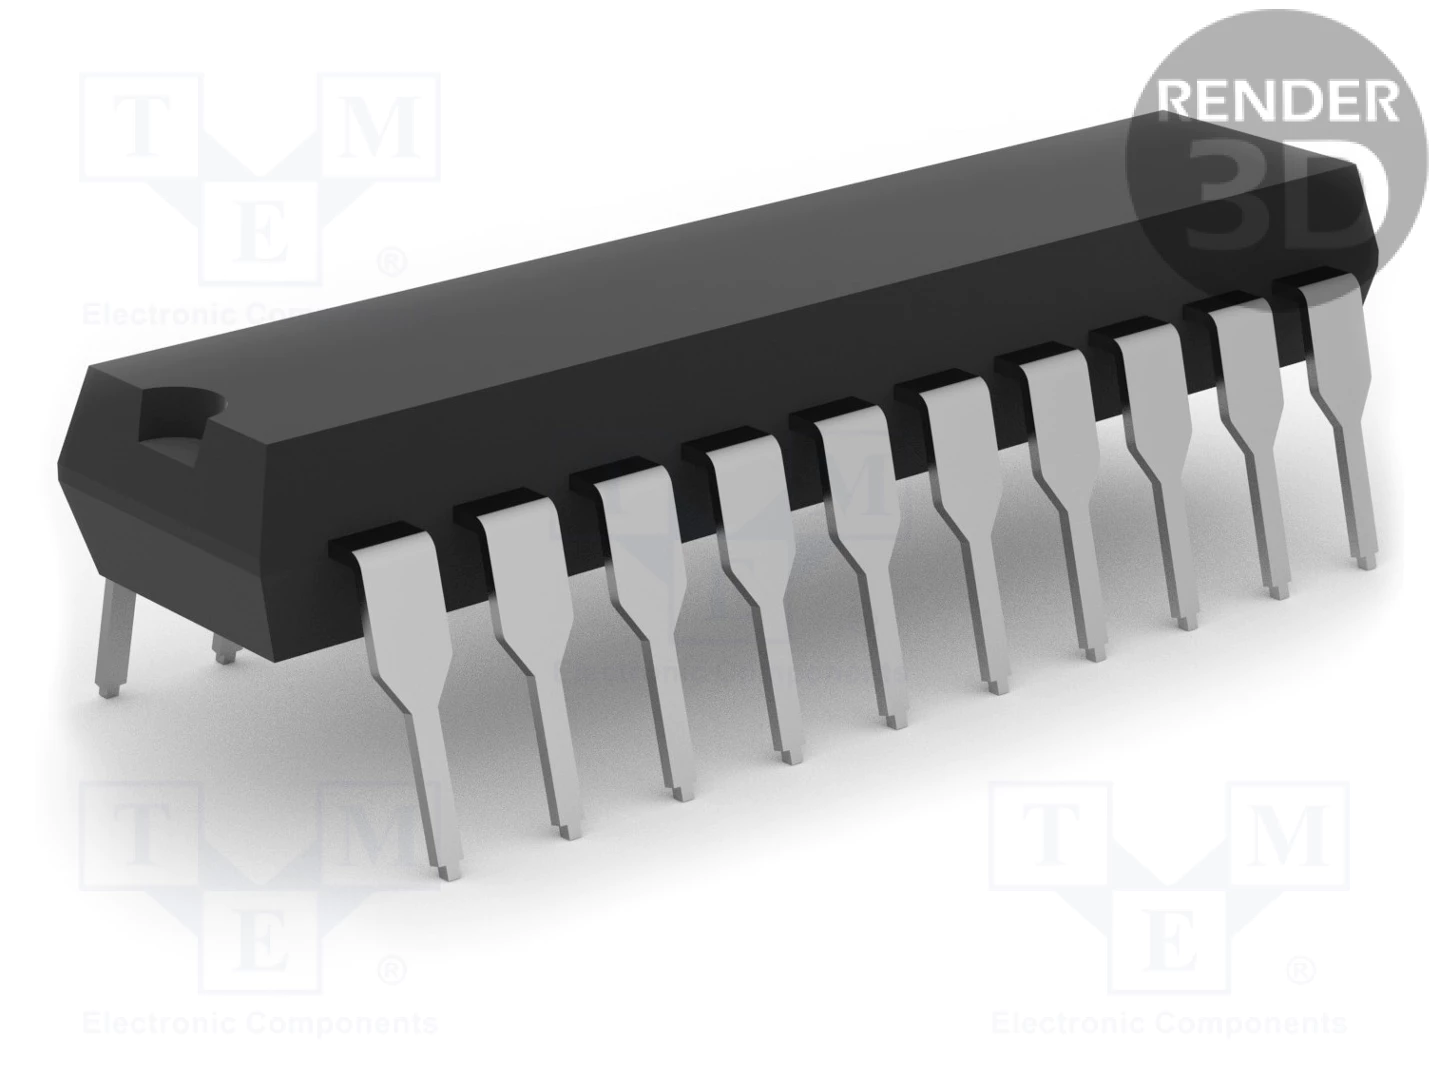 PIC16F1619-I/P - PIC microcontroller, SRAM 1024B, 32MHz, THT, DIP20